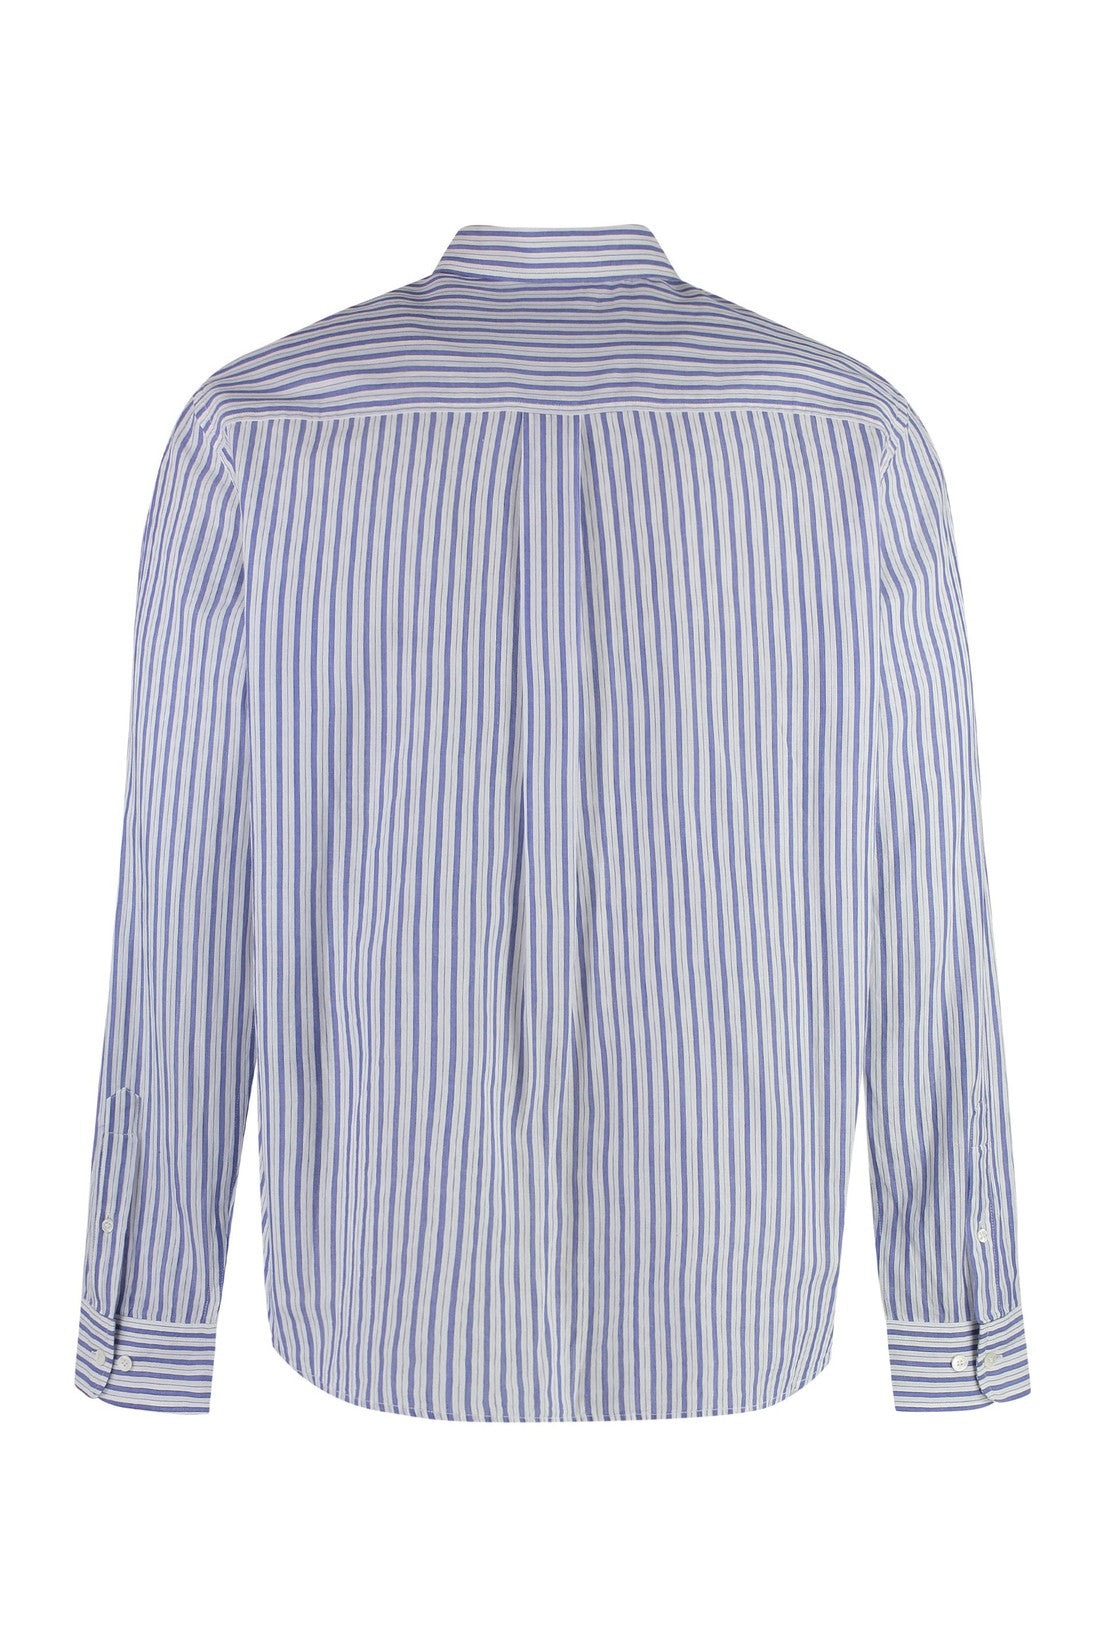 Jasolo Striped cotton shirt